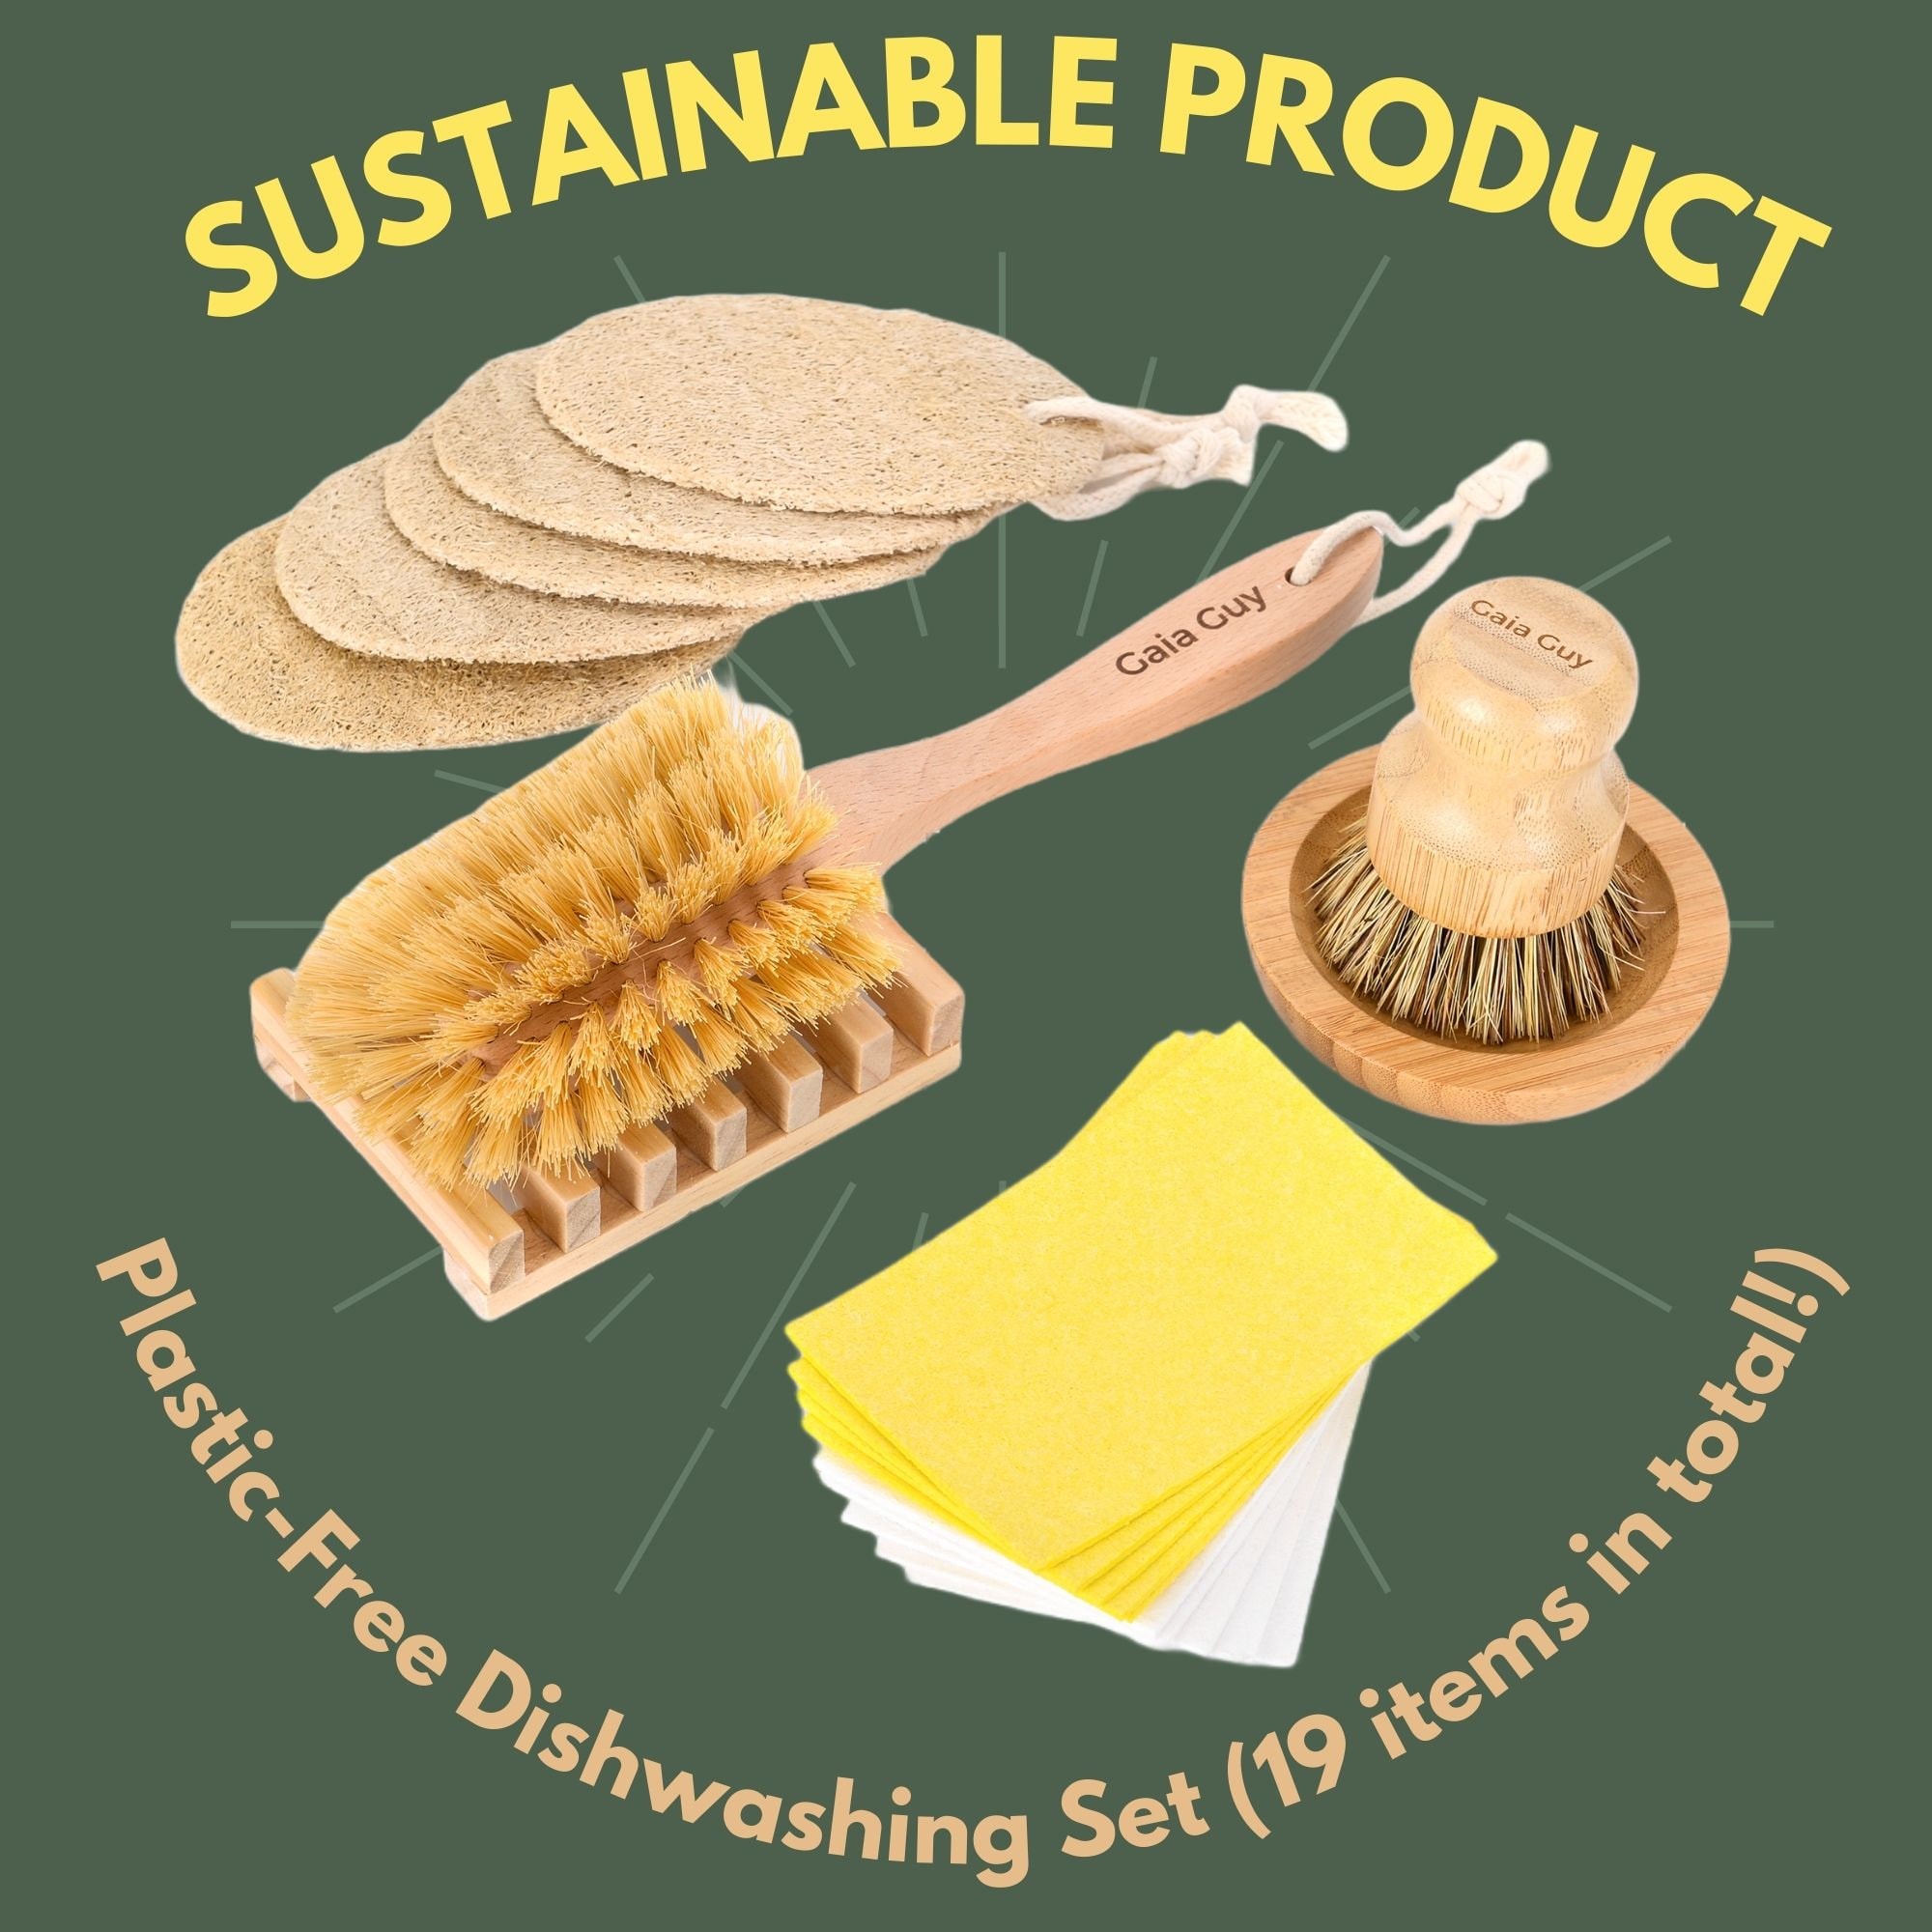 Palm Pot Brush- Bamboo Round 3 Packs by Klickpick Home Mini Dish Brush  Natural Scrub Brush Durable Scrubber Cleaning Kit with Natural Stiff Sisal